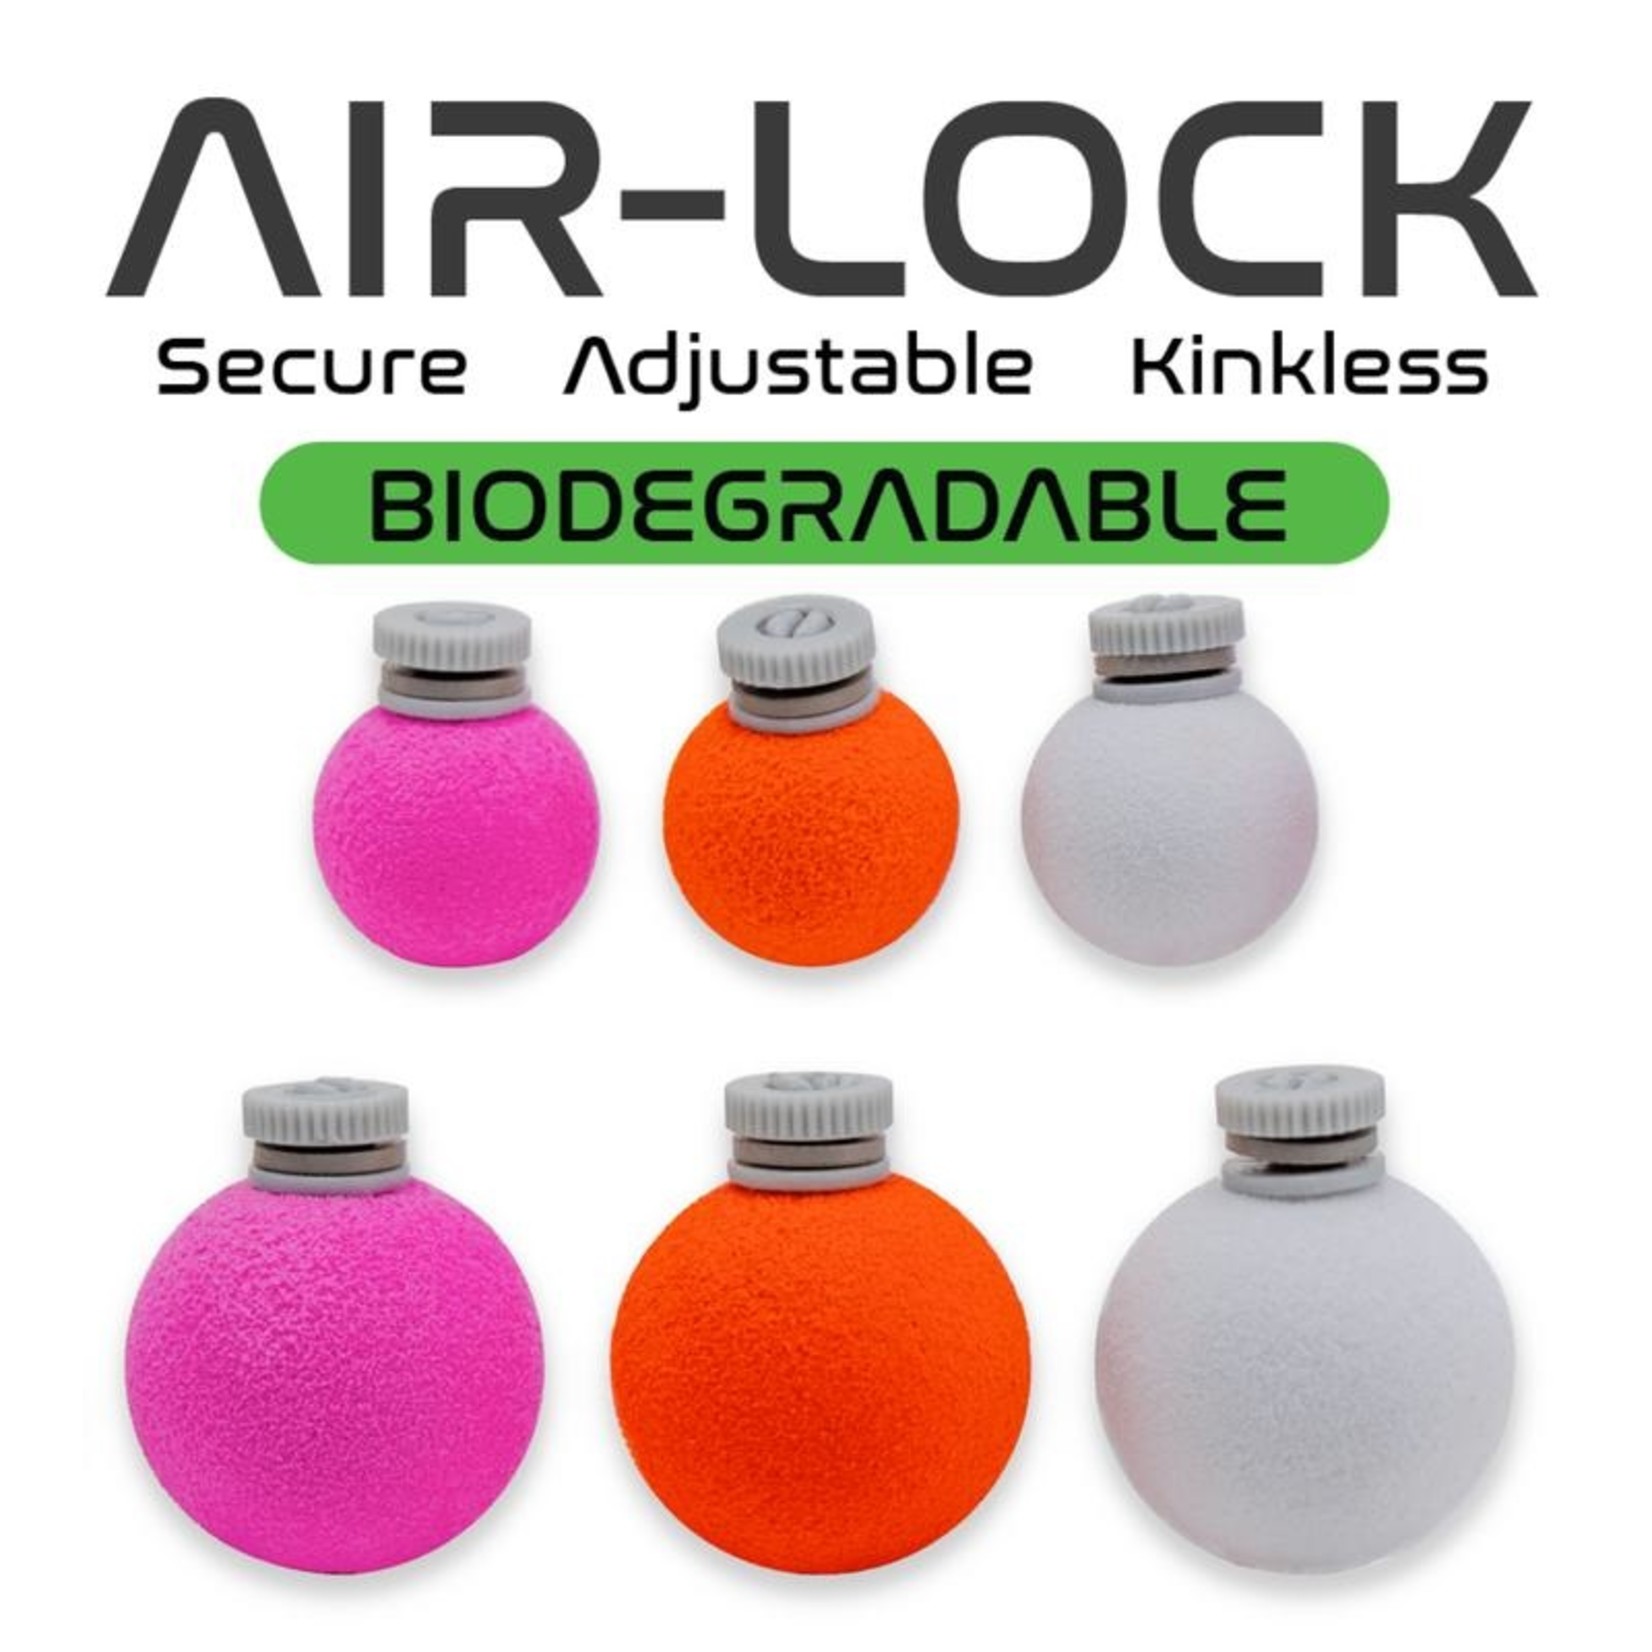 Air-Lock 3 Pack